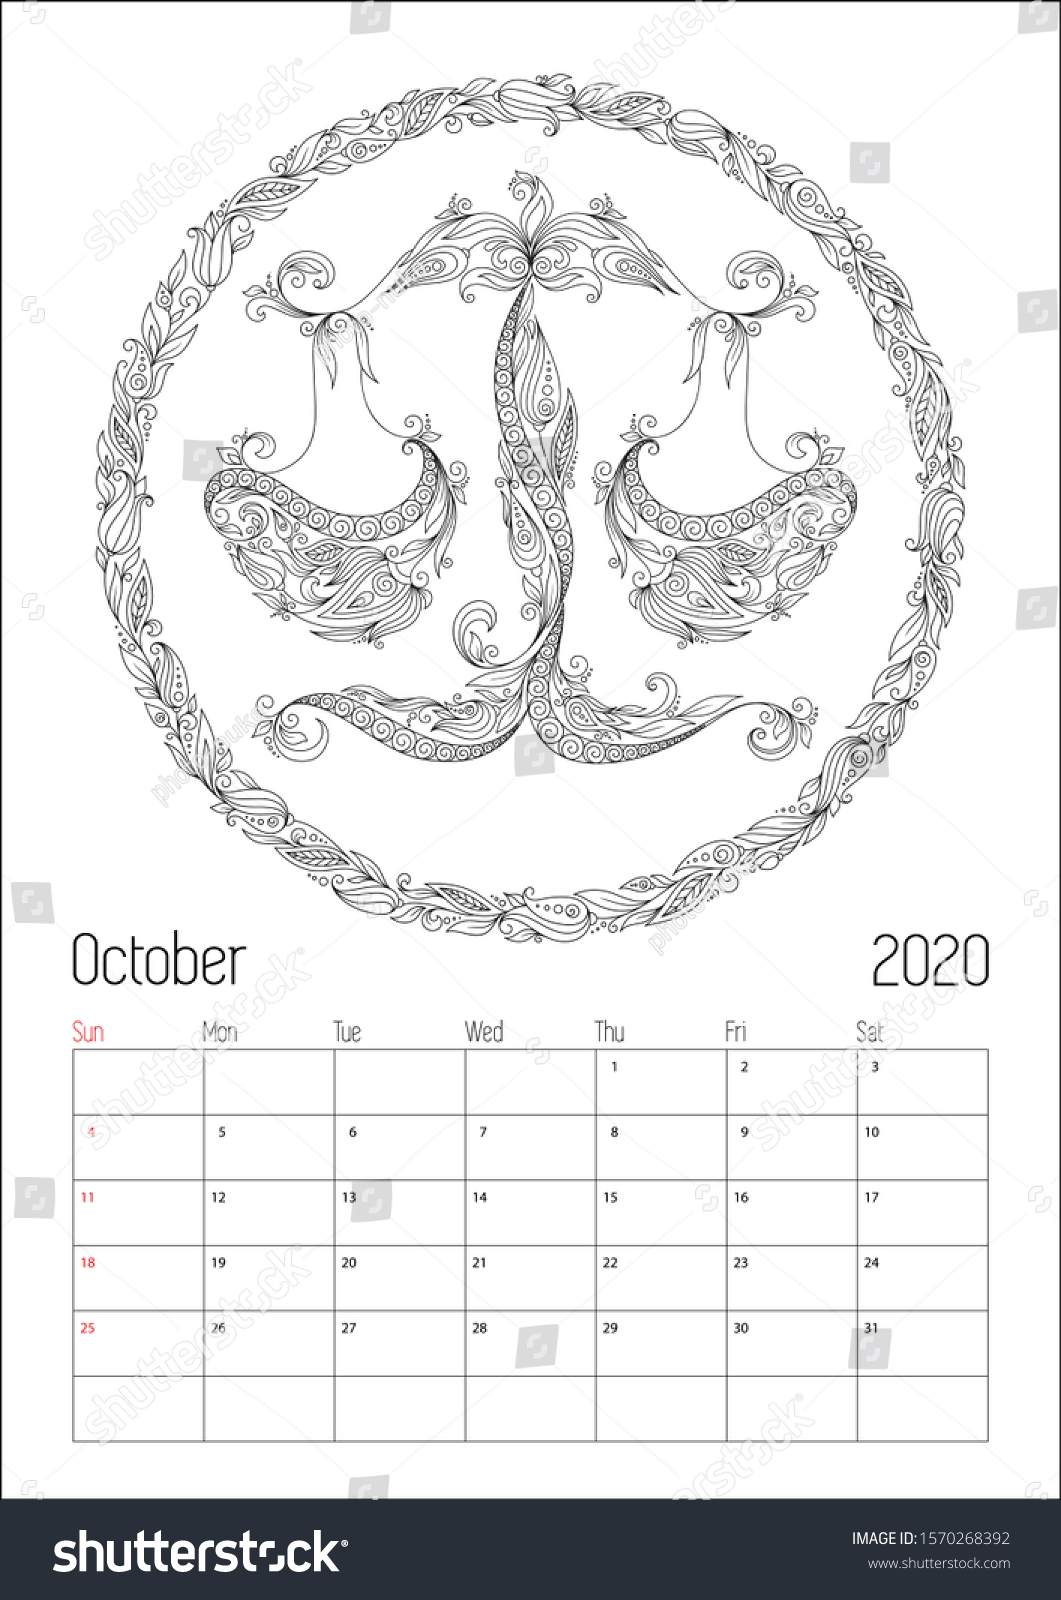 2020 Antistress Calendar Planner Doodle Illustration Stock Vector Royalty Free 1570268392